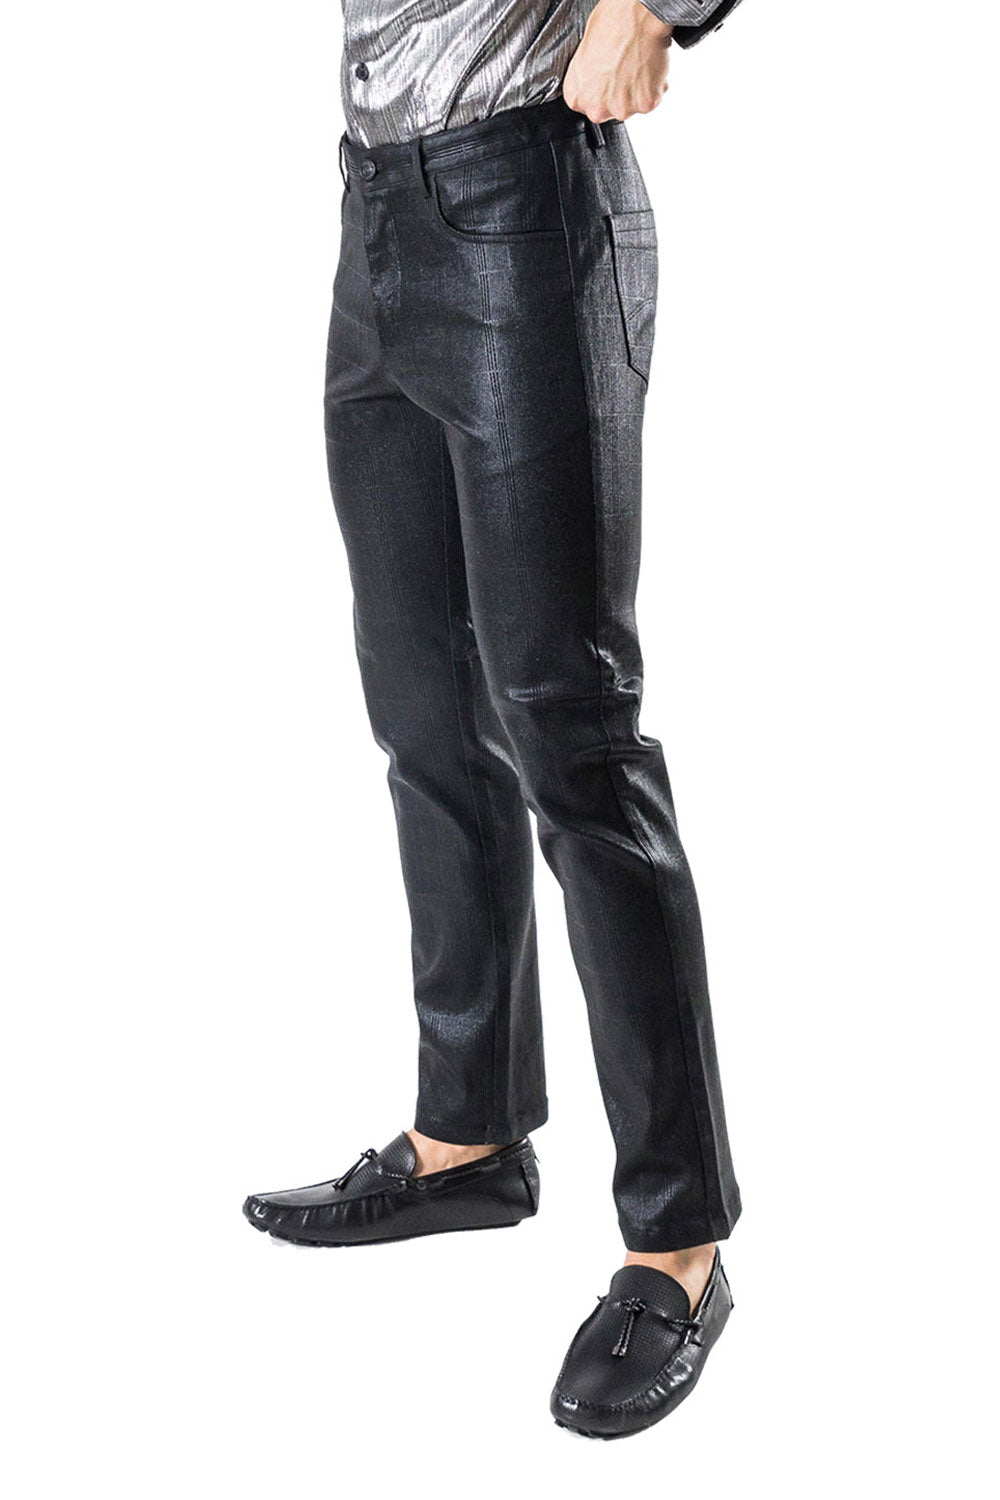 BARABAS men's shiny black chino pants CPW26 – BARABAS®